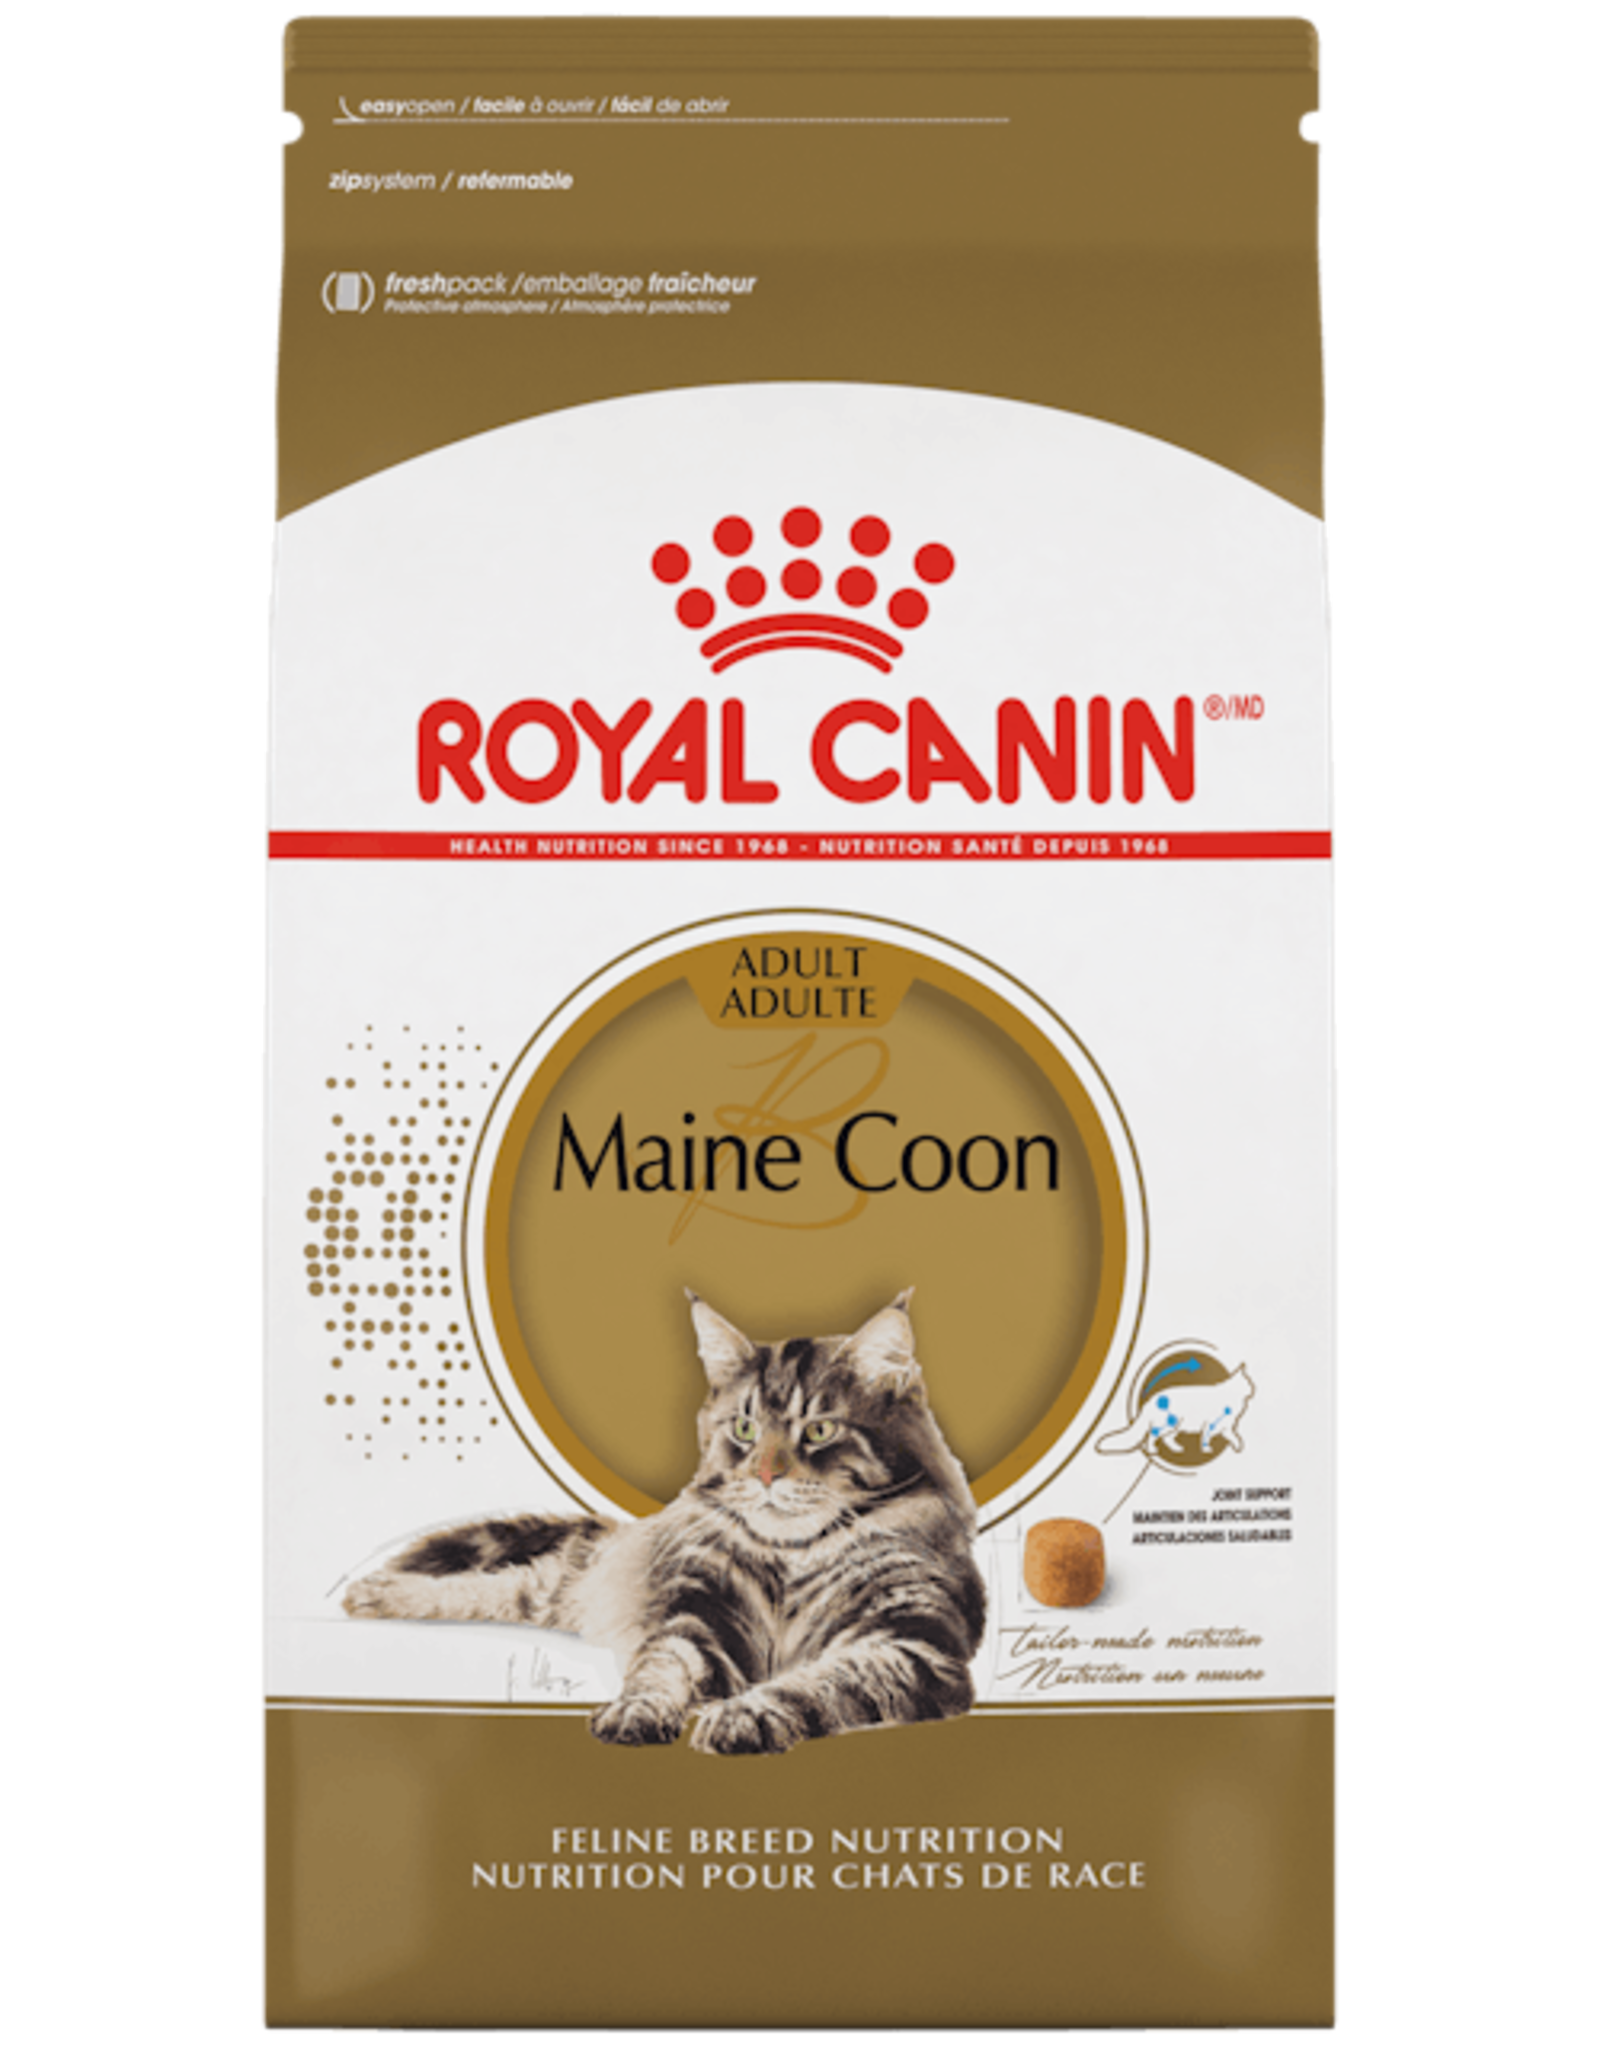 ROYAL CANIN ROYAL CANIN CAT MAINE COON 6LBS